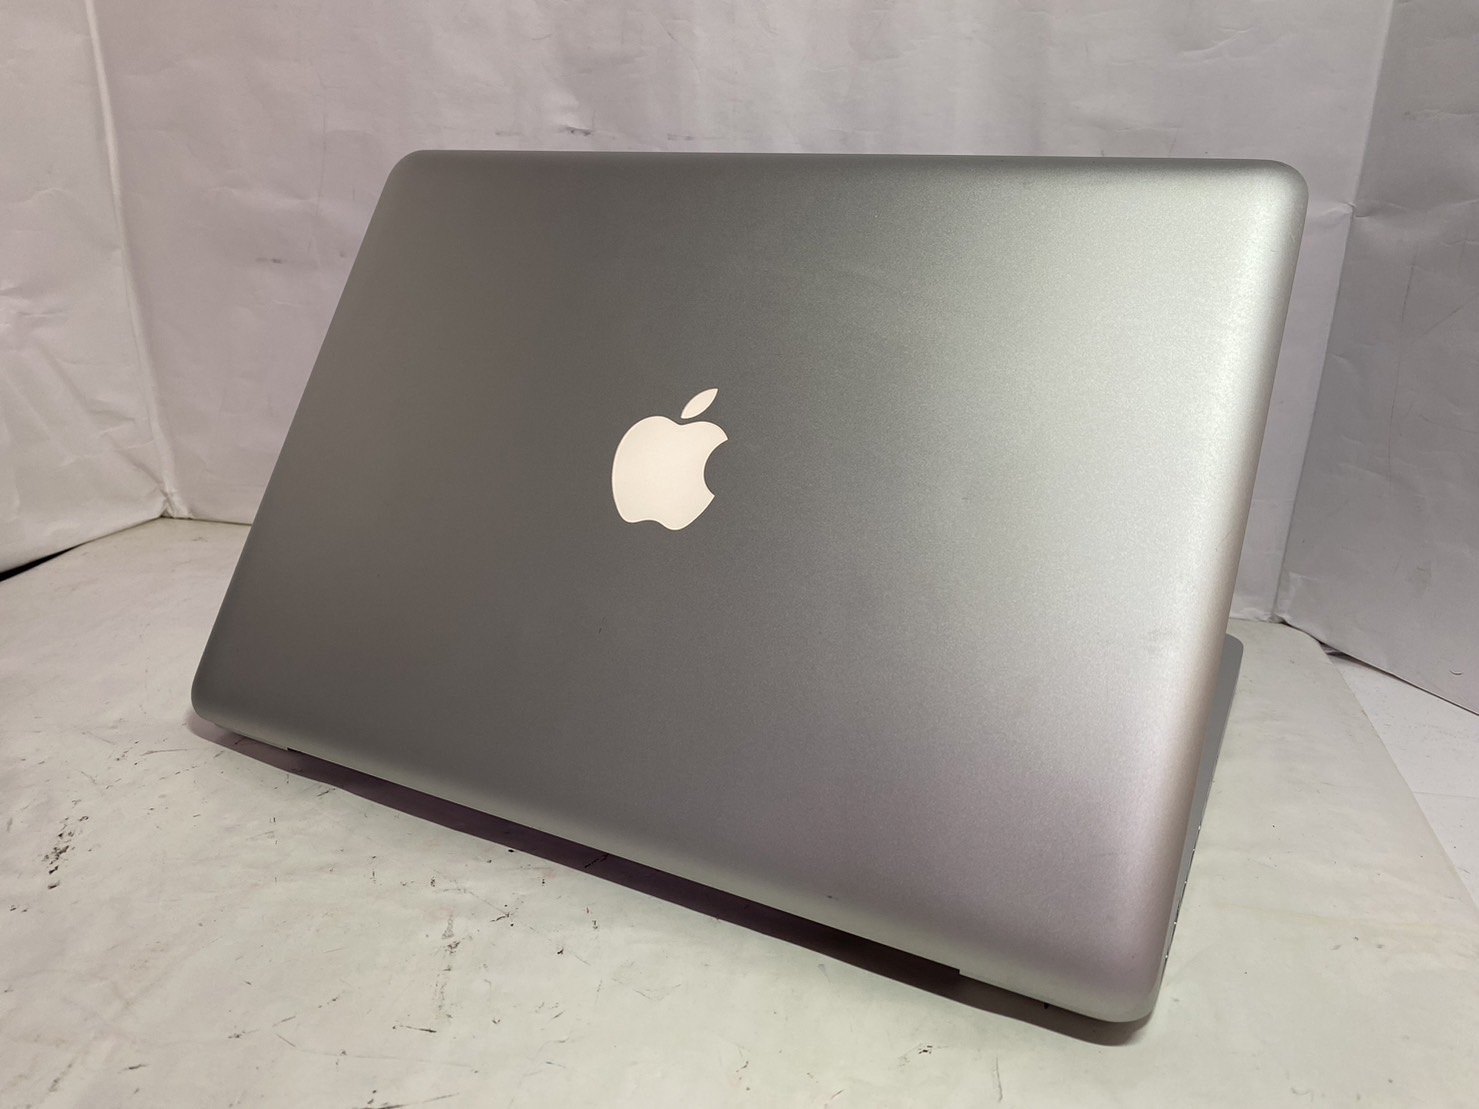 APPLE(アップル) MacBook Pro (13-inch, Mid 2008) A1278の激安通販 